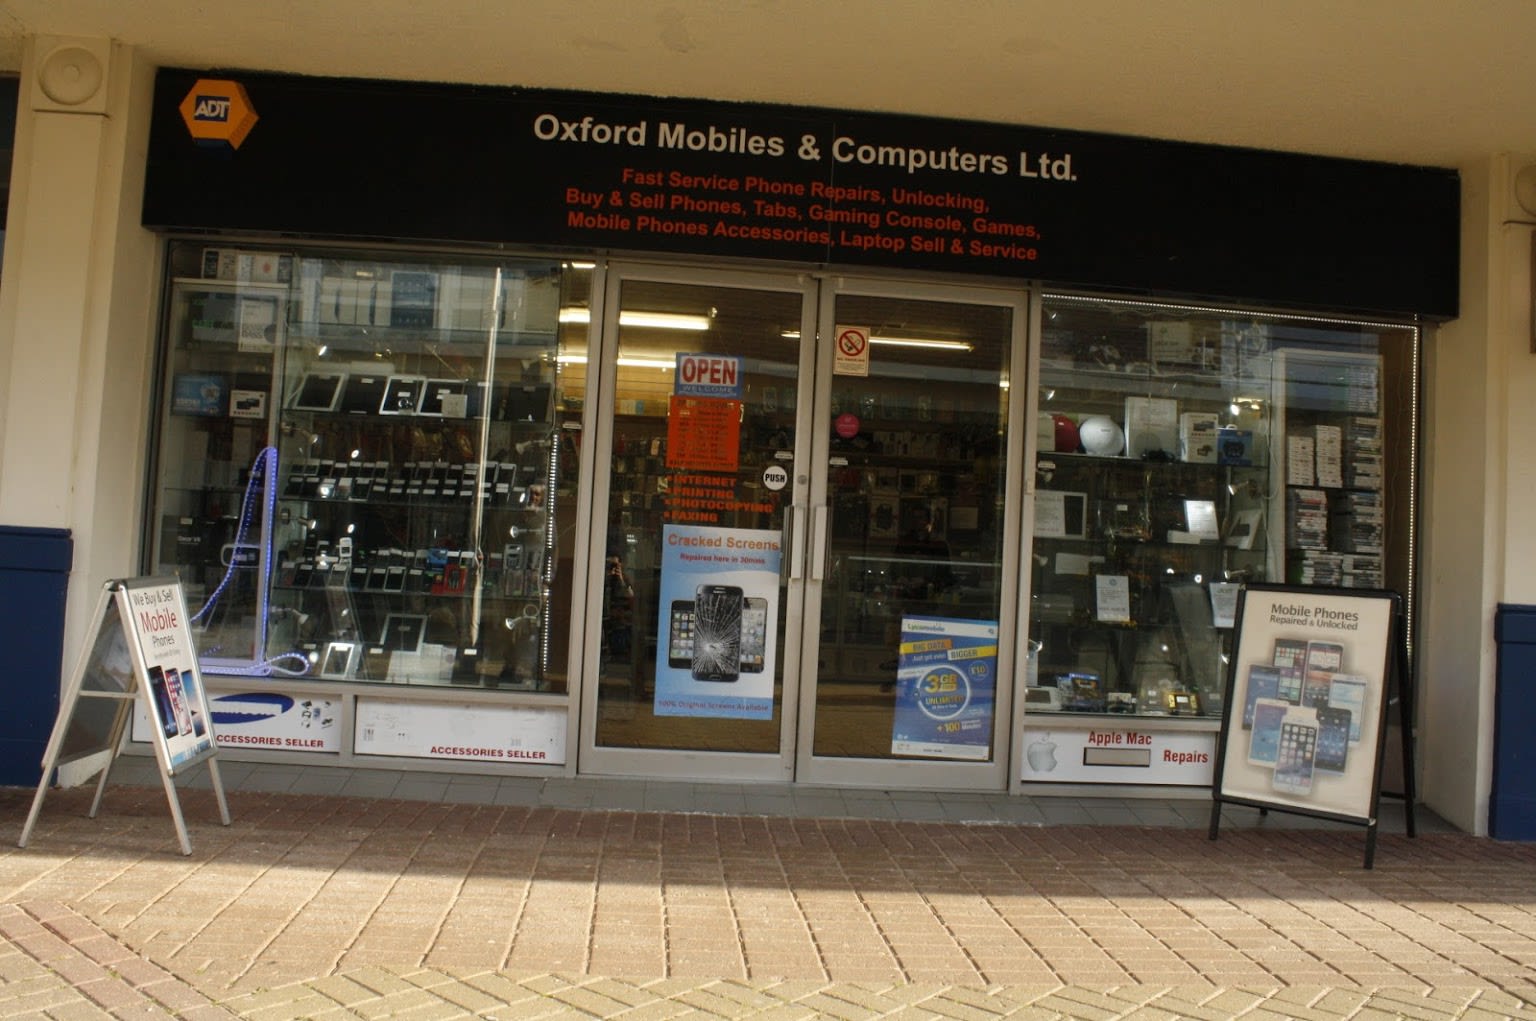 Oxford Mobiles & Computers Ltd